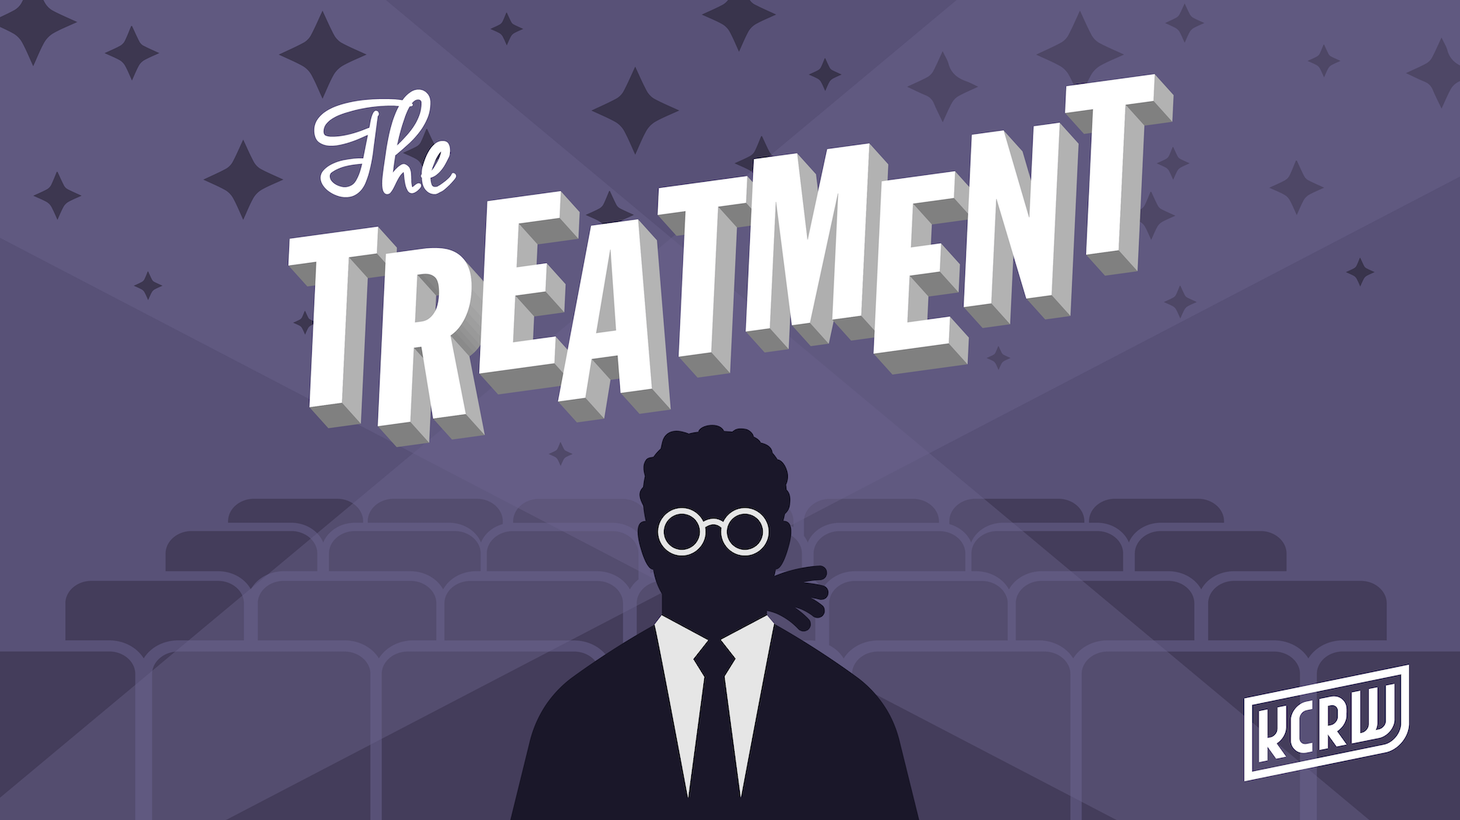 Jordan Peele (made for audio) | The Treatment | KCRW